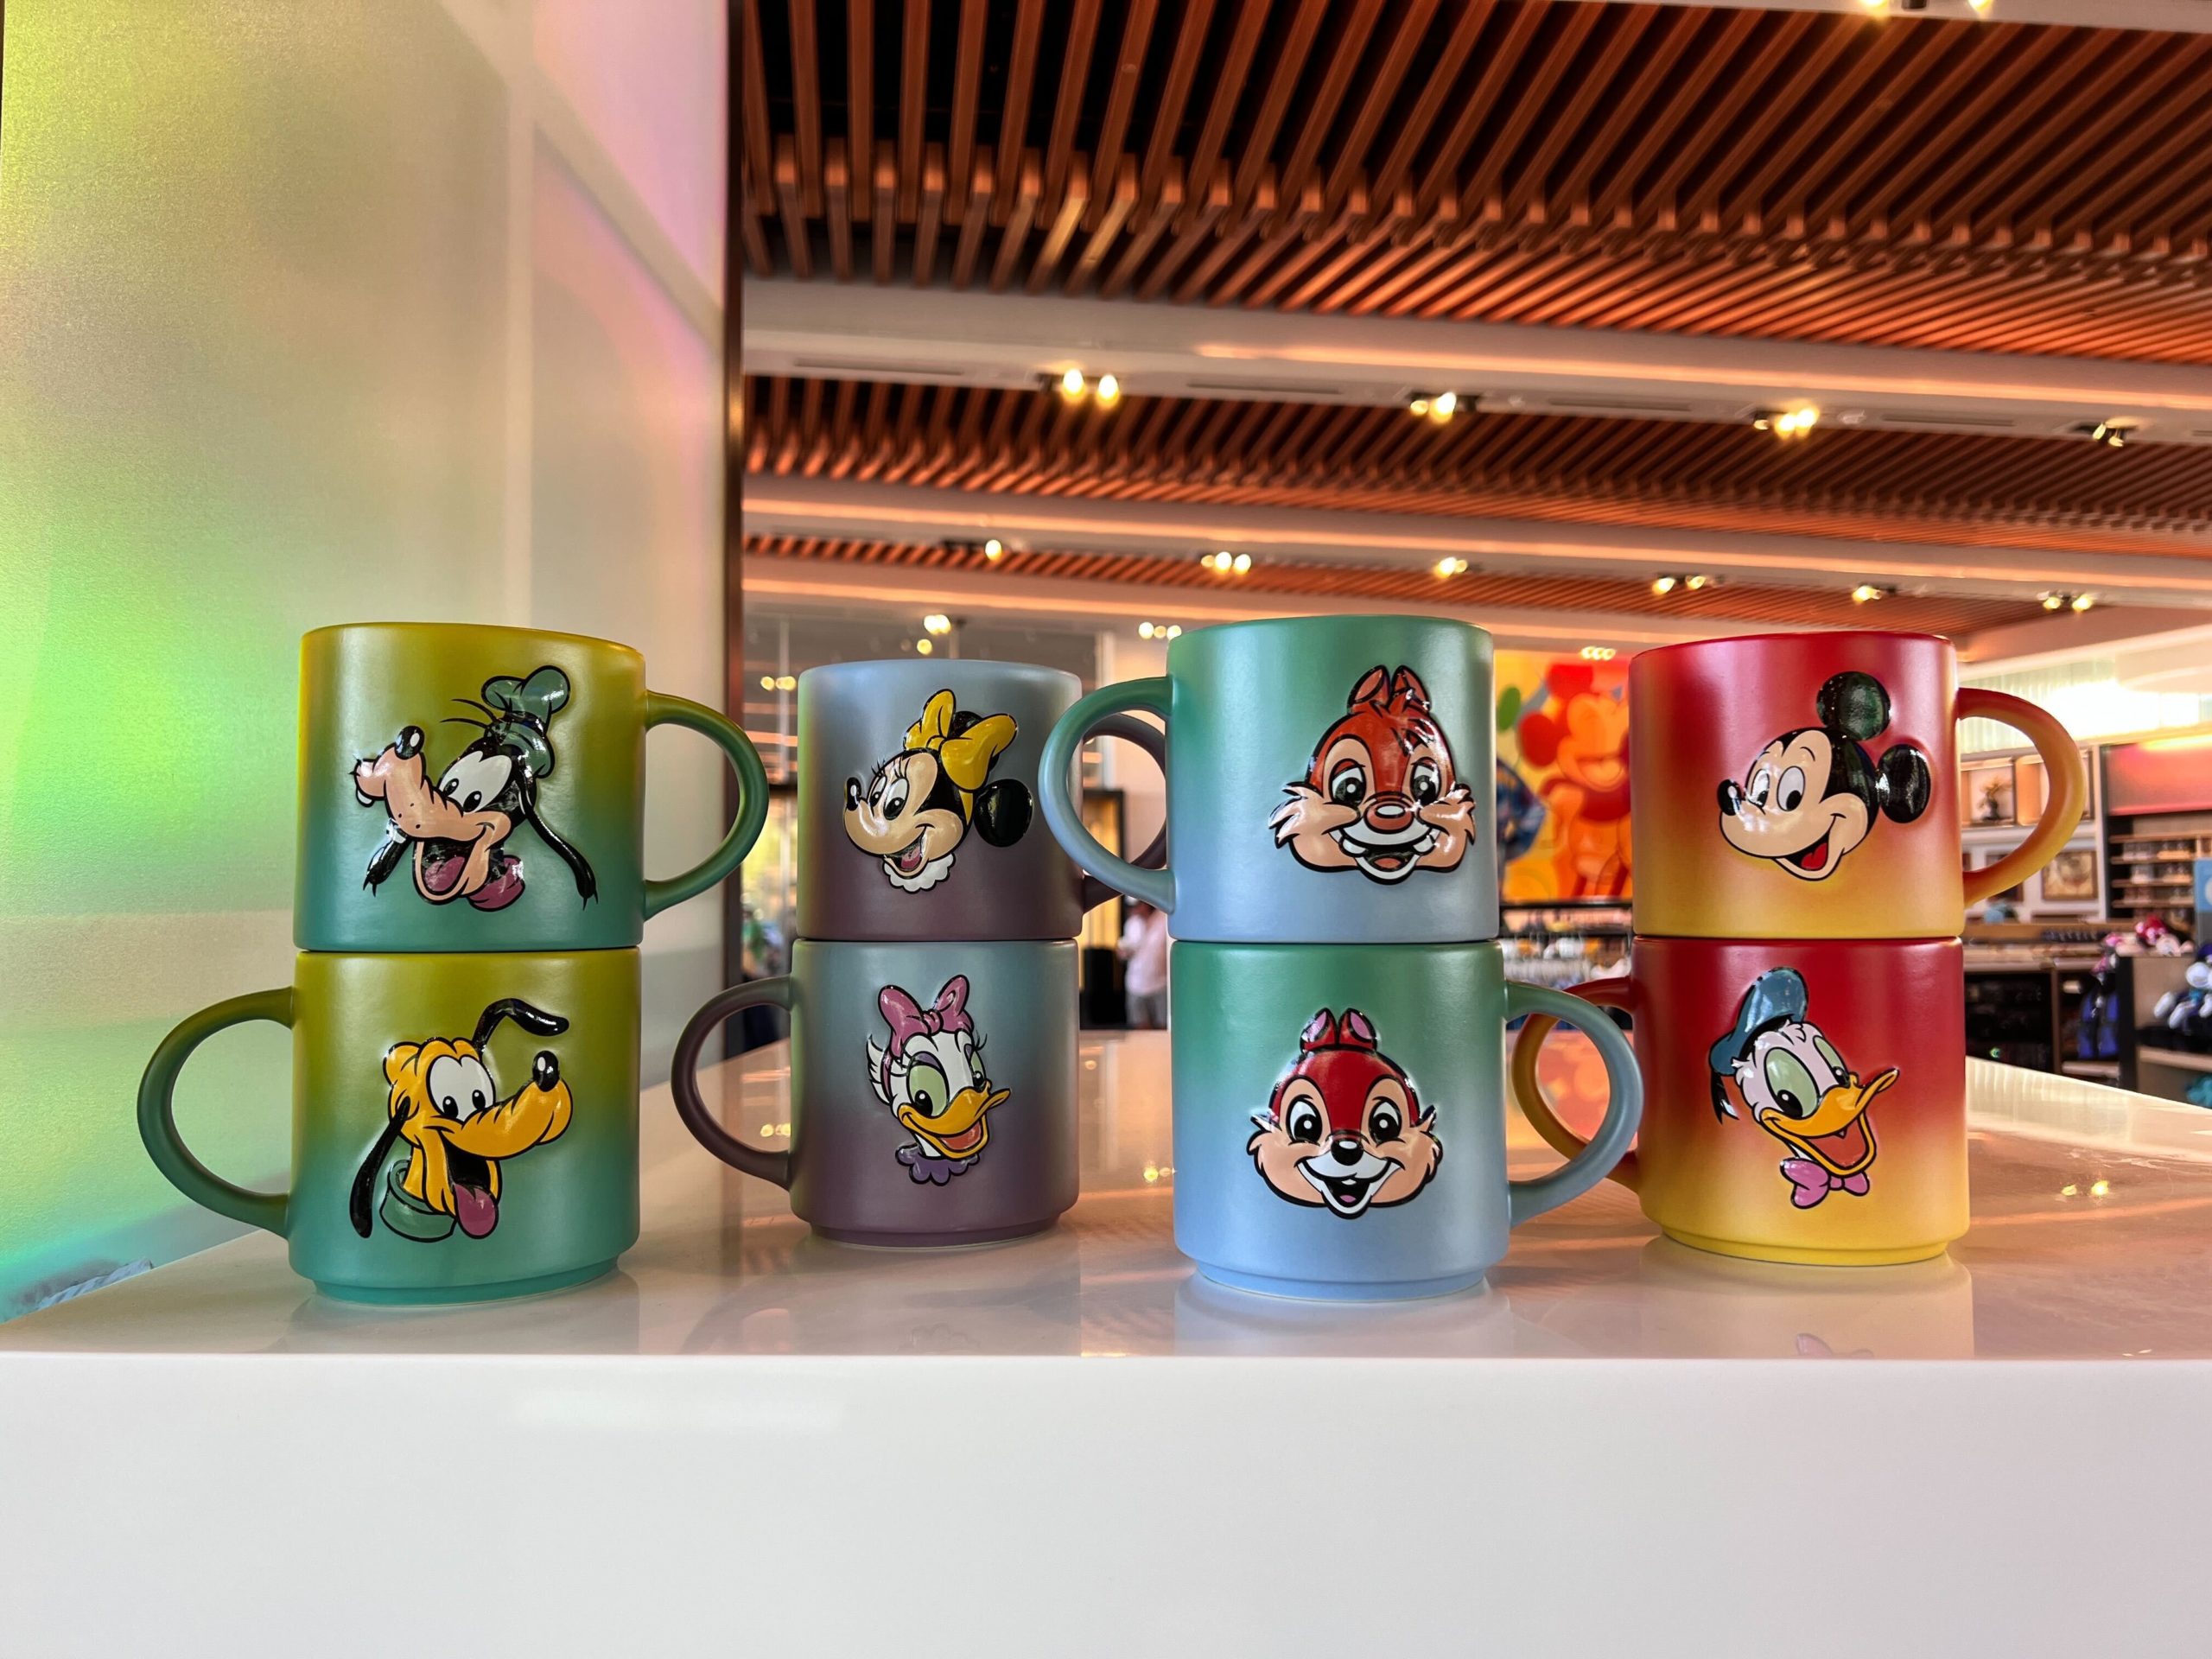 https://mickeyblog.com/wp-content/uploads/2023/02/Disney-character-mugs_0184-scaled.jpg